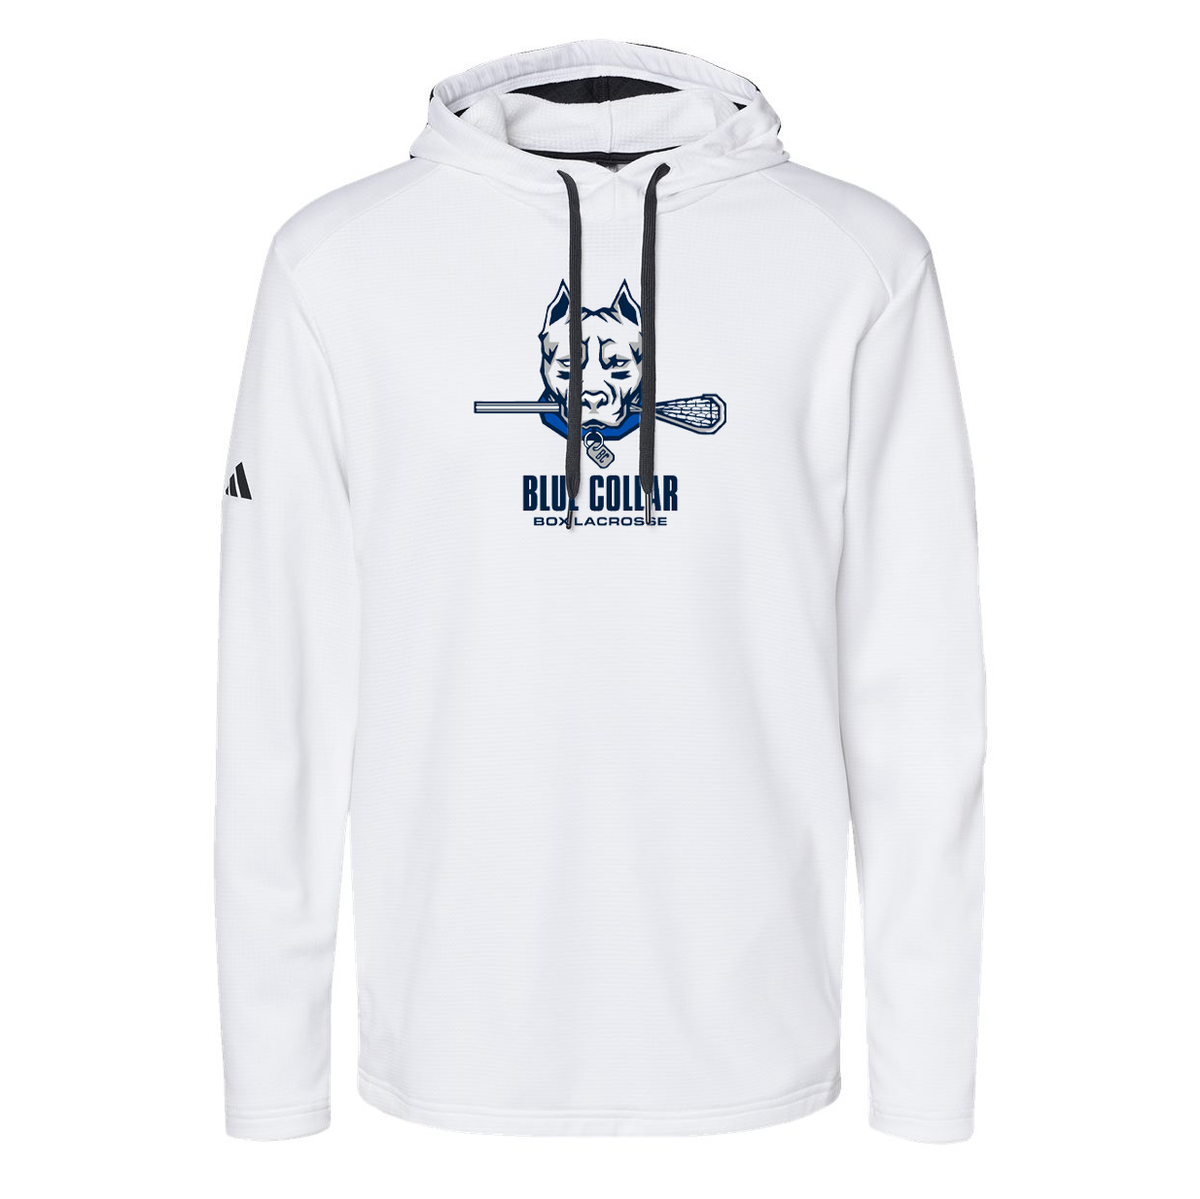 Blue Collar Box Lacrosse Adidas Textured Hooded Sweatshirt